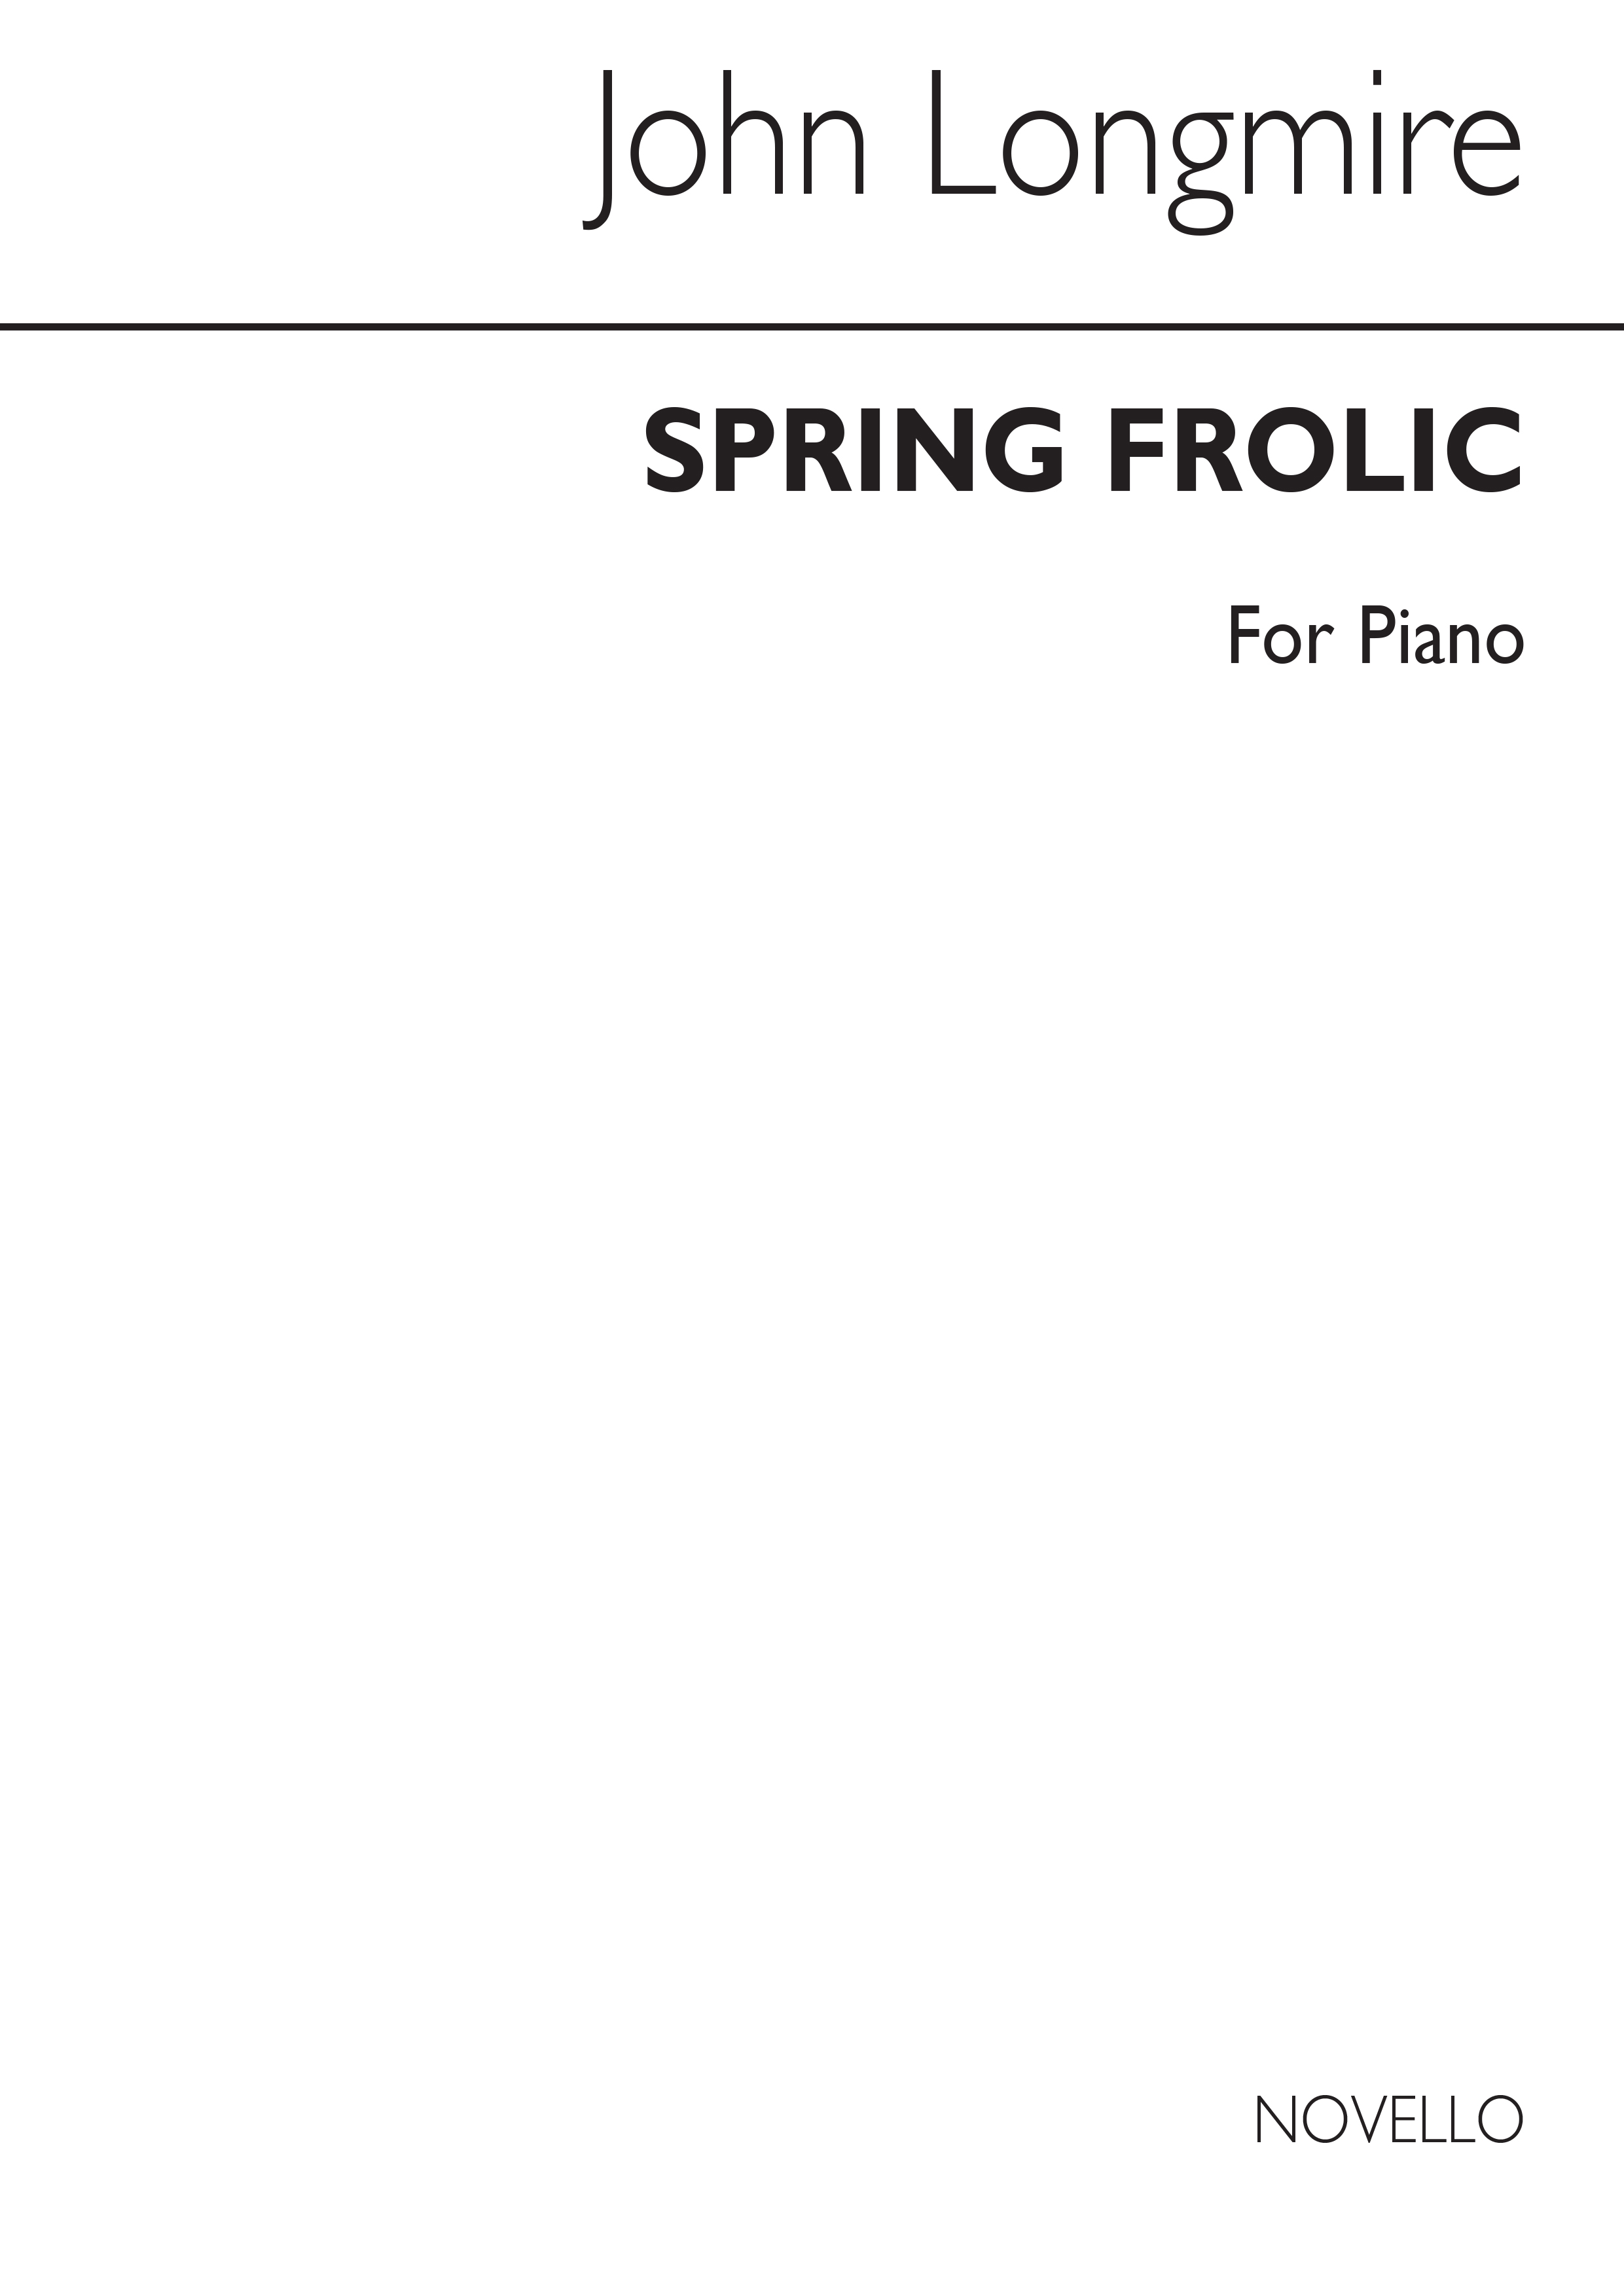 John Longmire: Spring Frolic